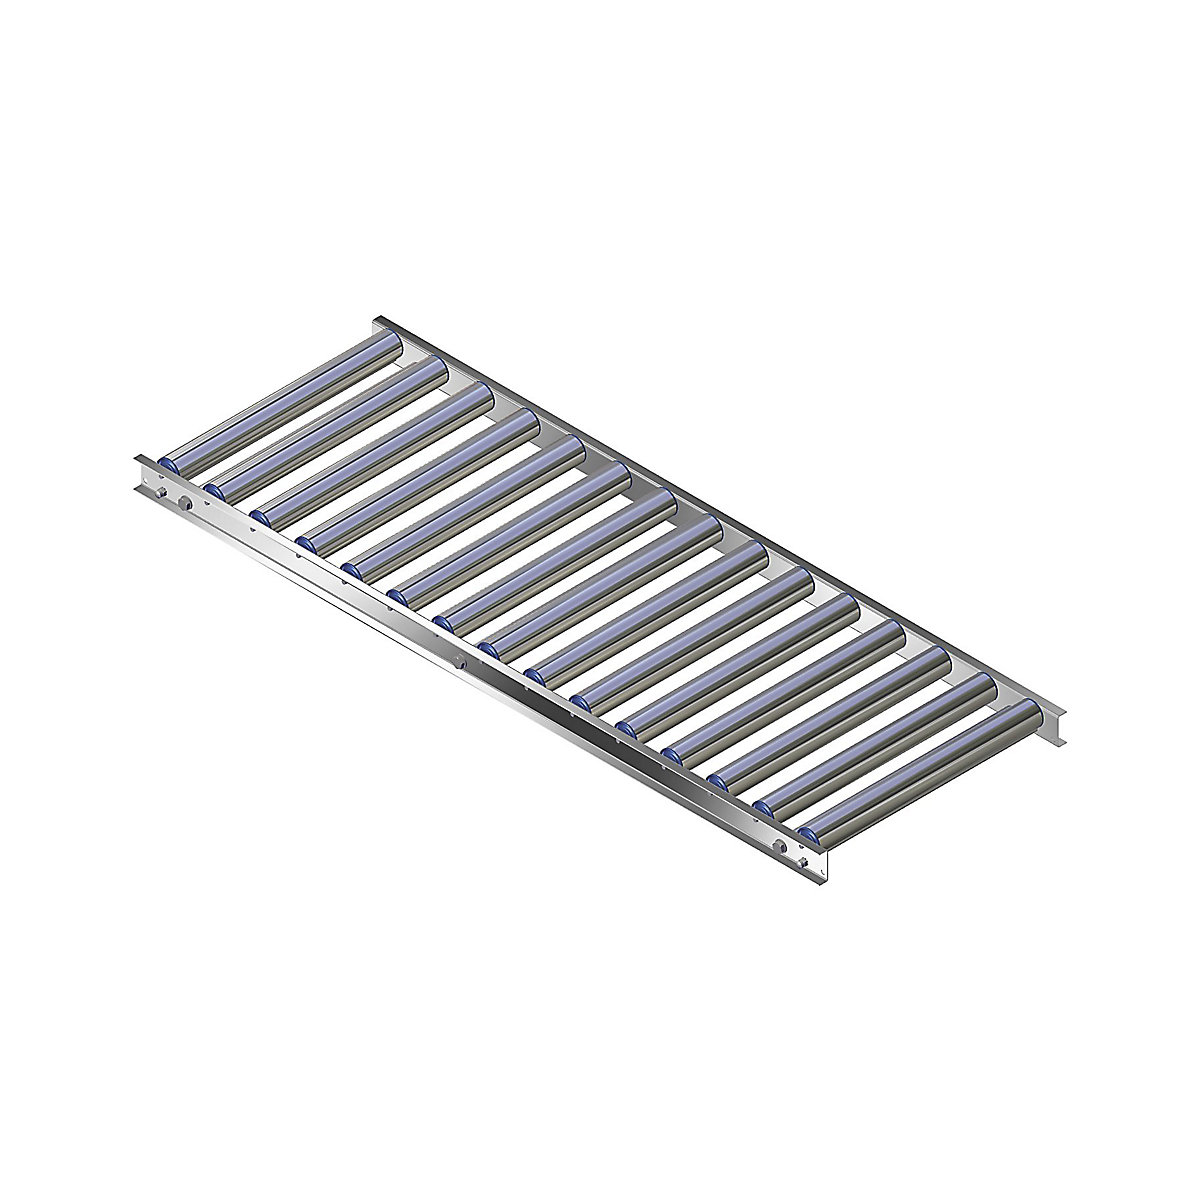 Gura – Light duty roller conveyor, aluminium frame with aluminium rollers, track width 500 mm, axle spacing 100 mm, length 1.5 m